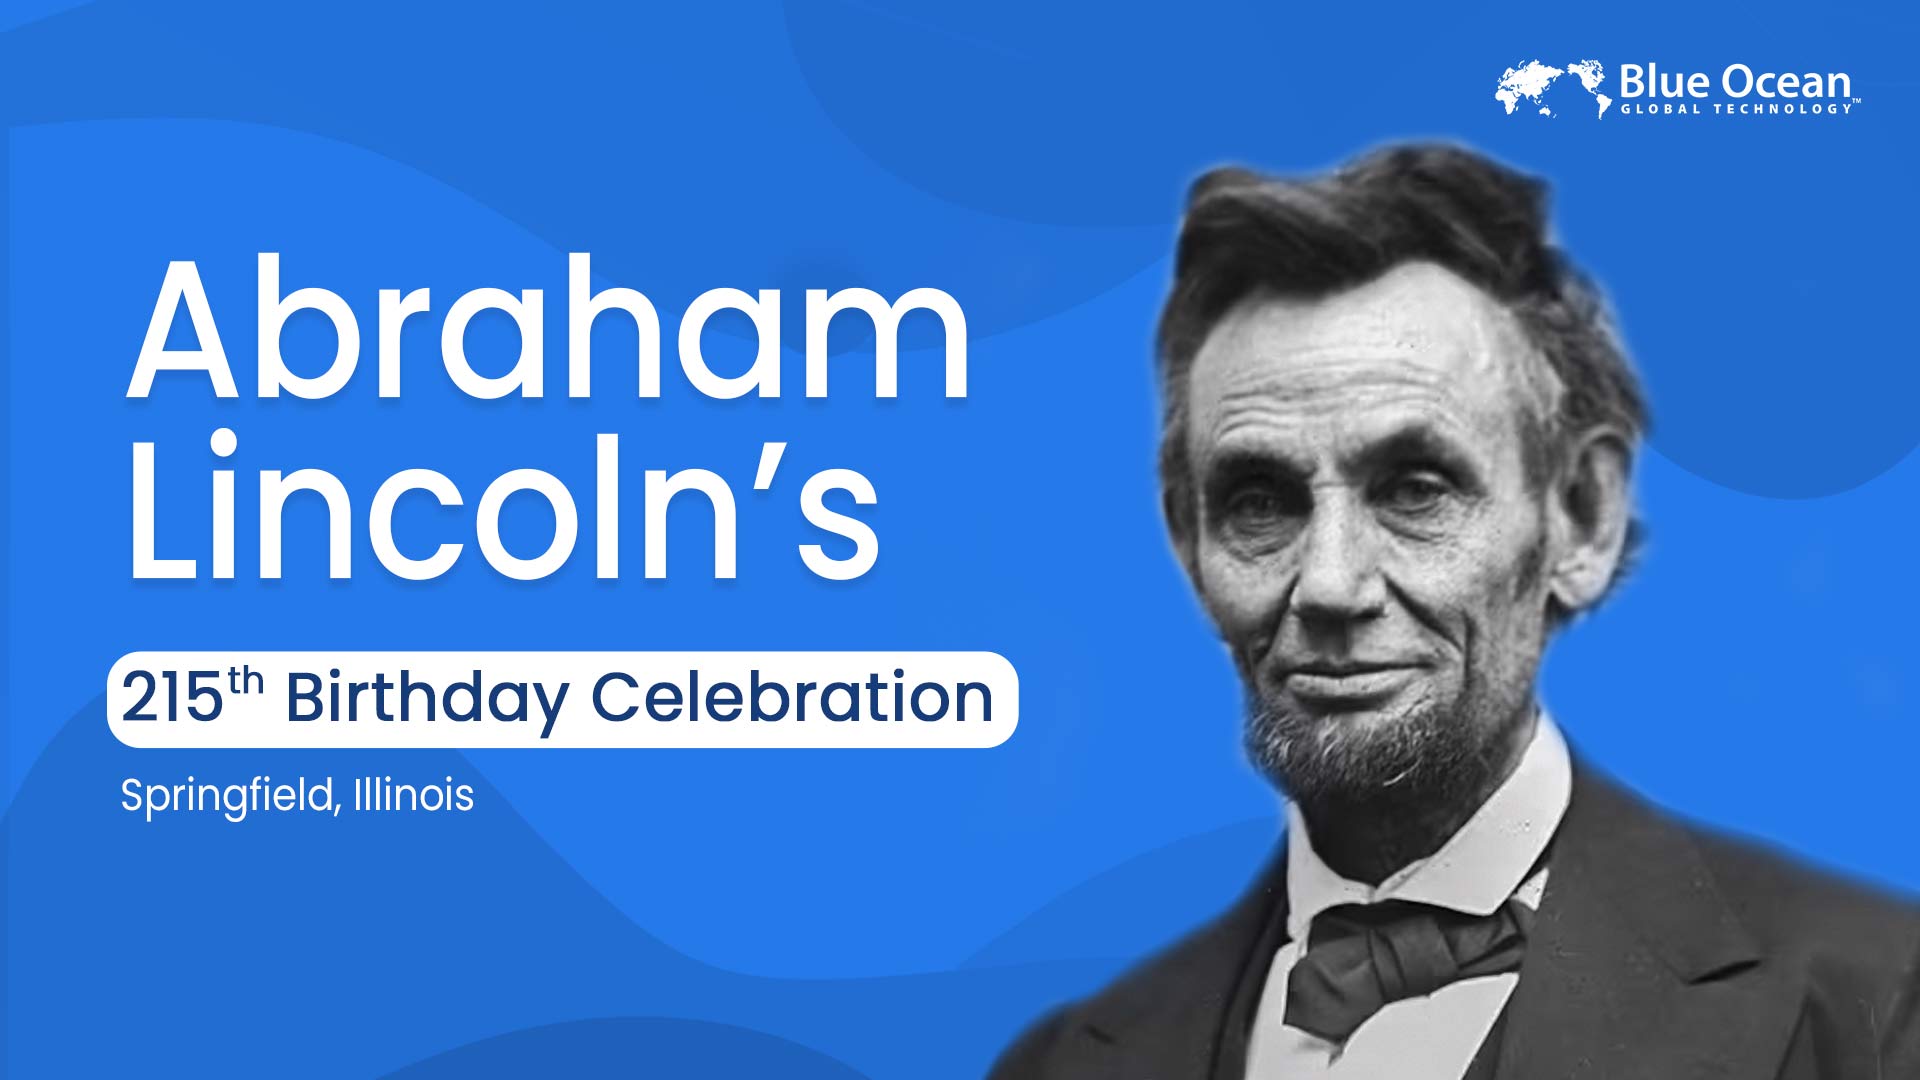 Abraham Lincoln’s 215th Birthday Celebration in Springfield, Illinois